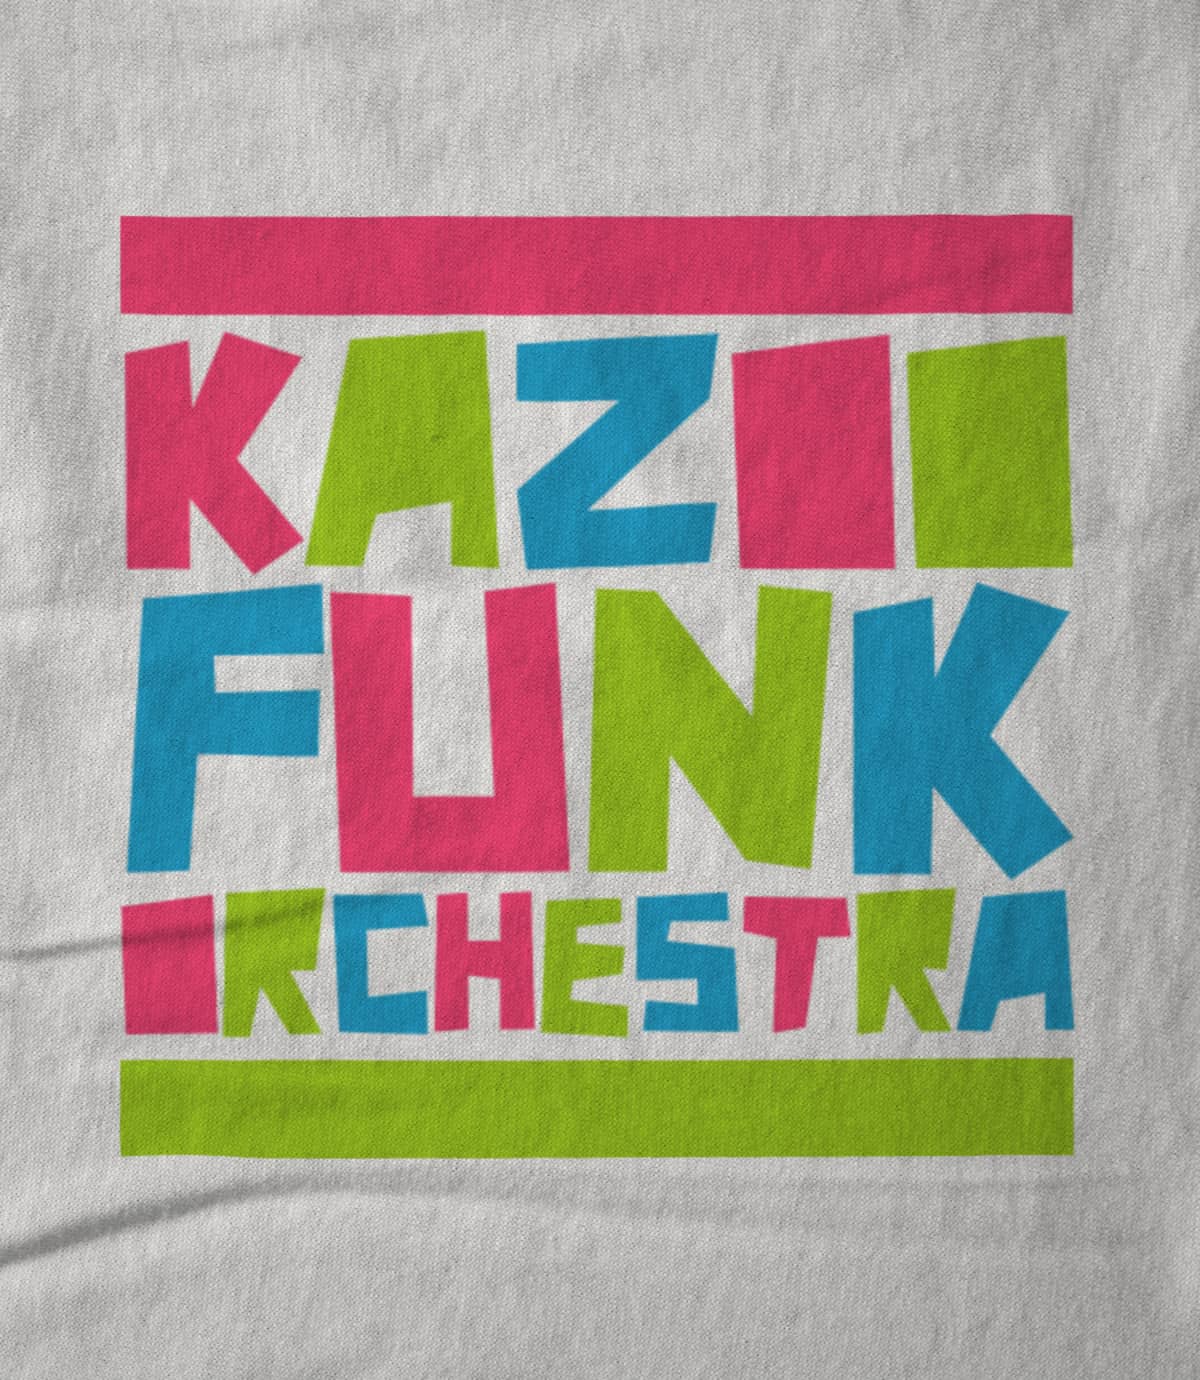 The Kazoo Funk Orchestra